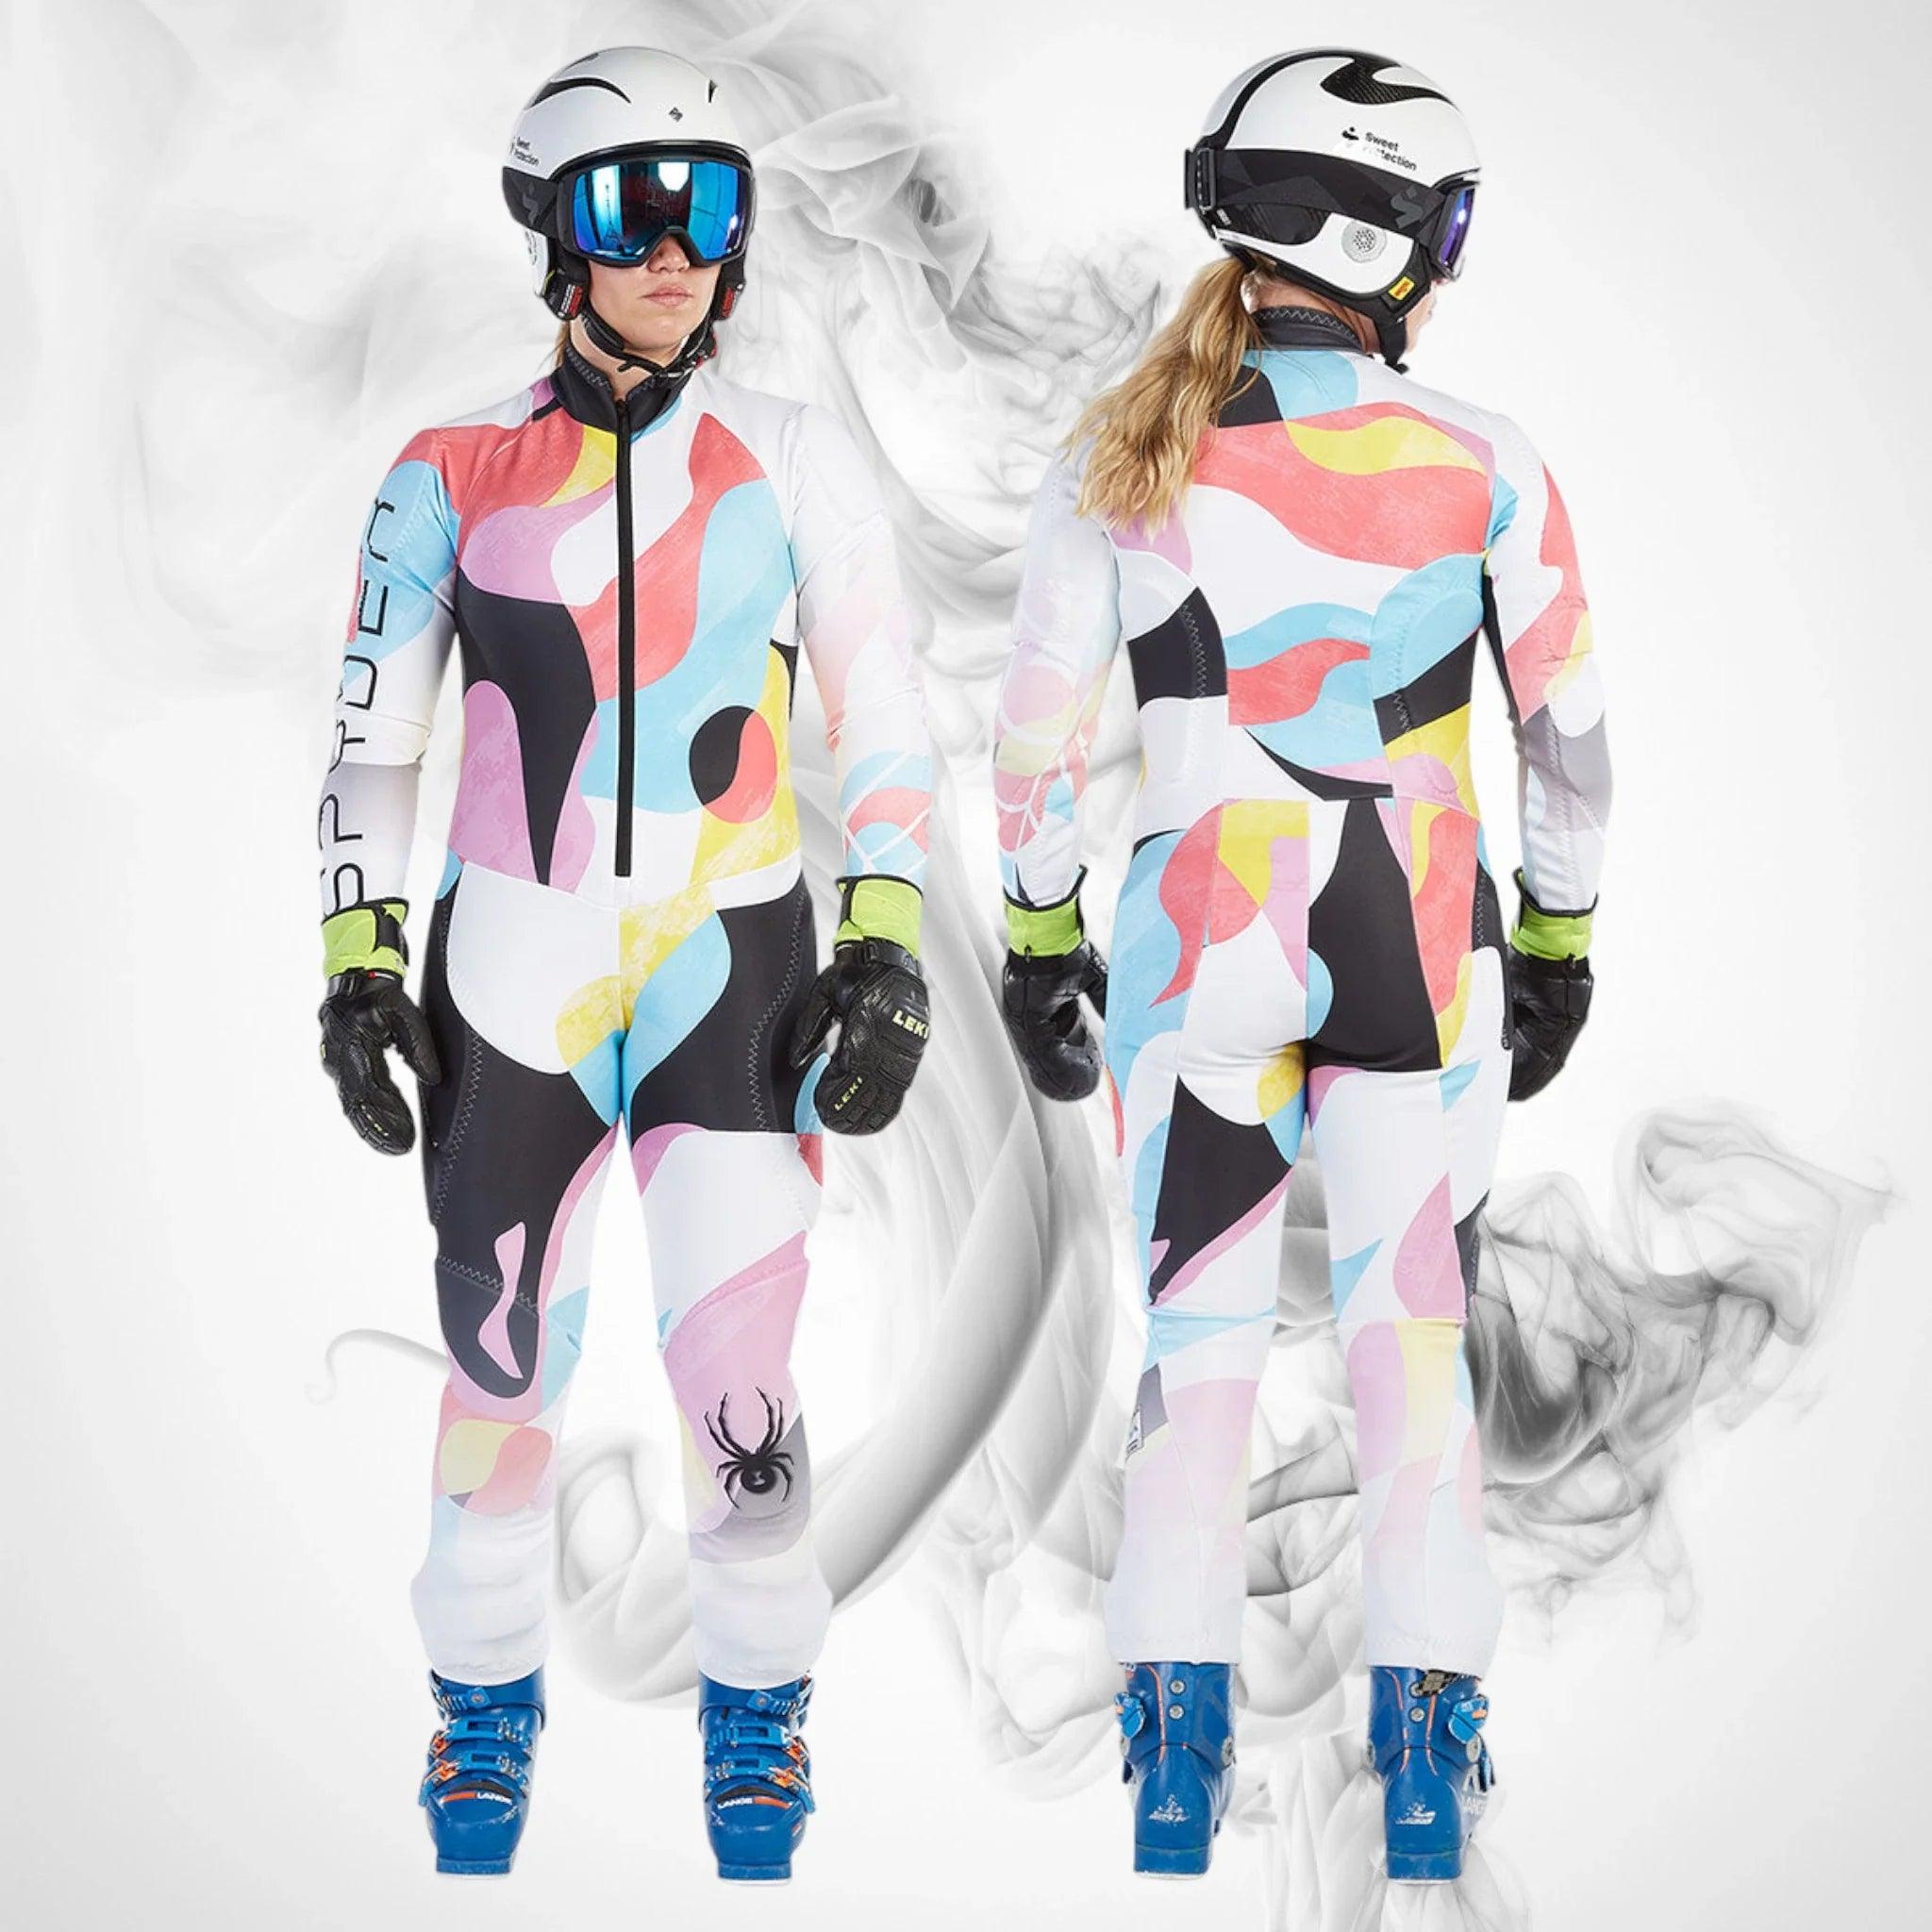 2023 Spyder Women's Performance GS Suit - Dash Racegear 